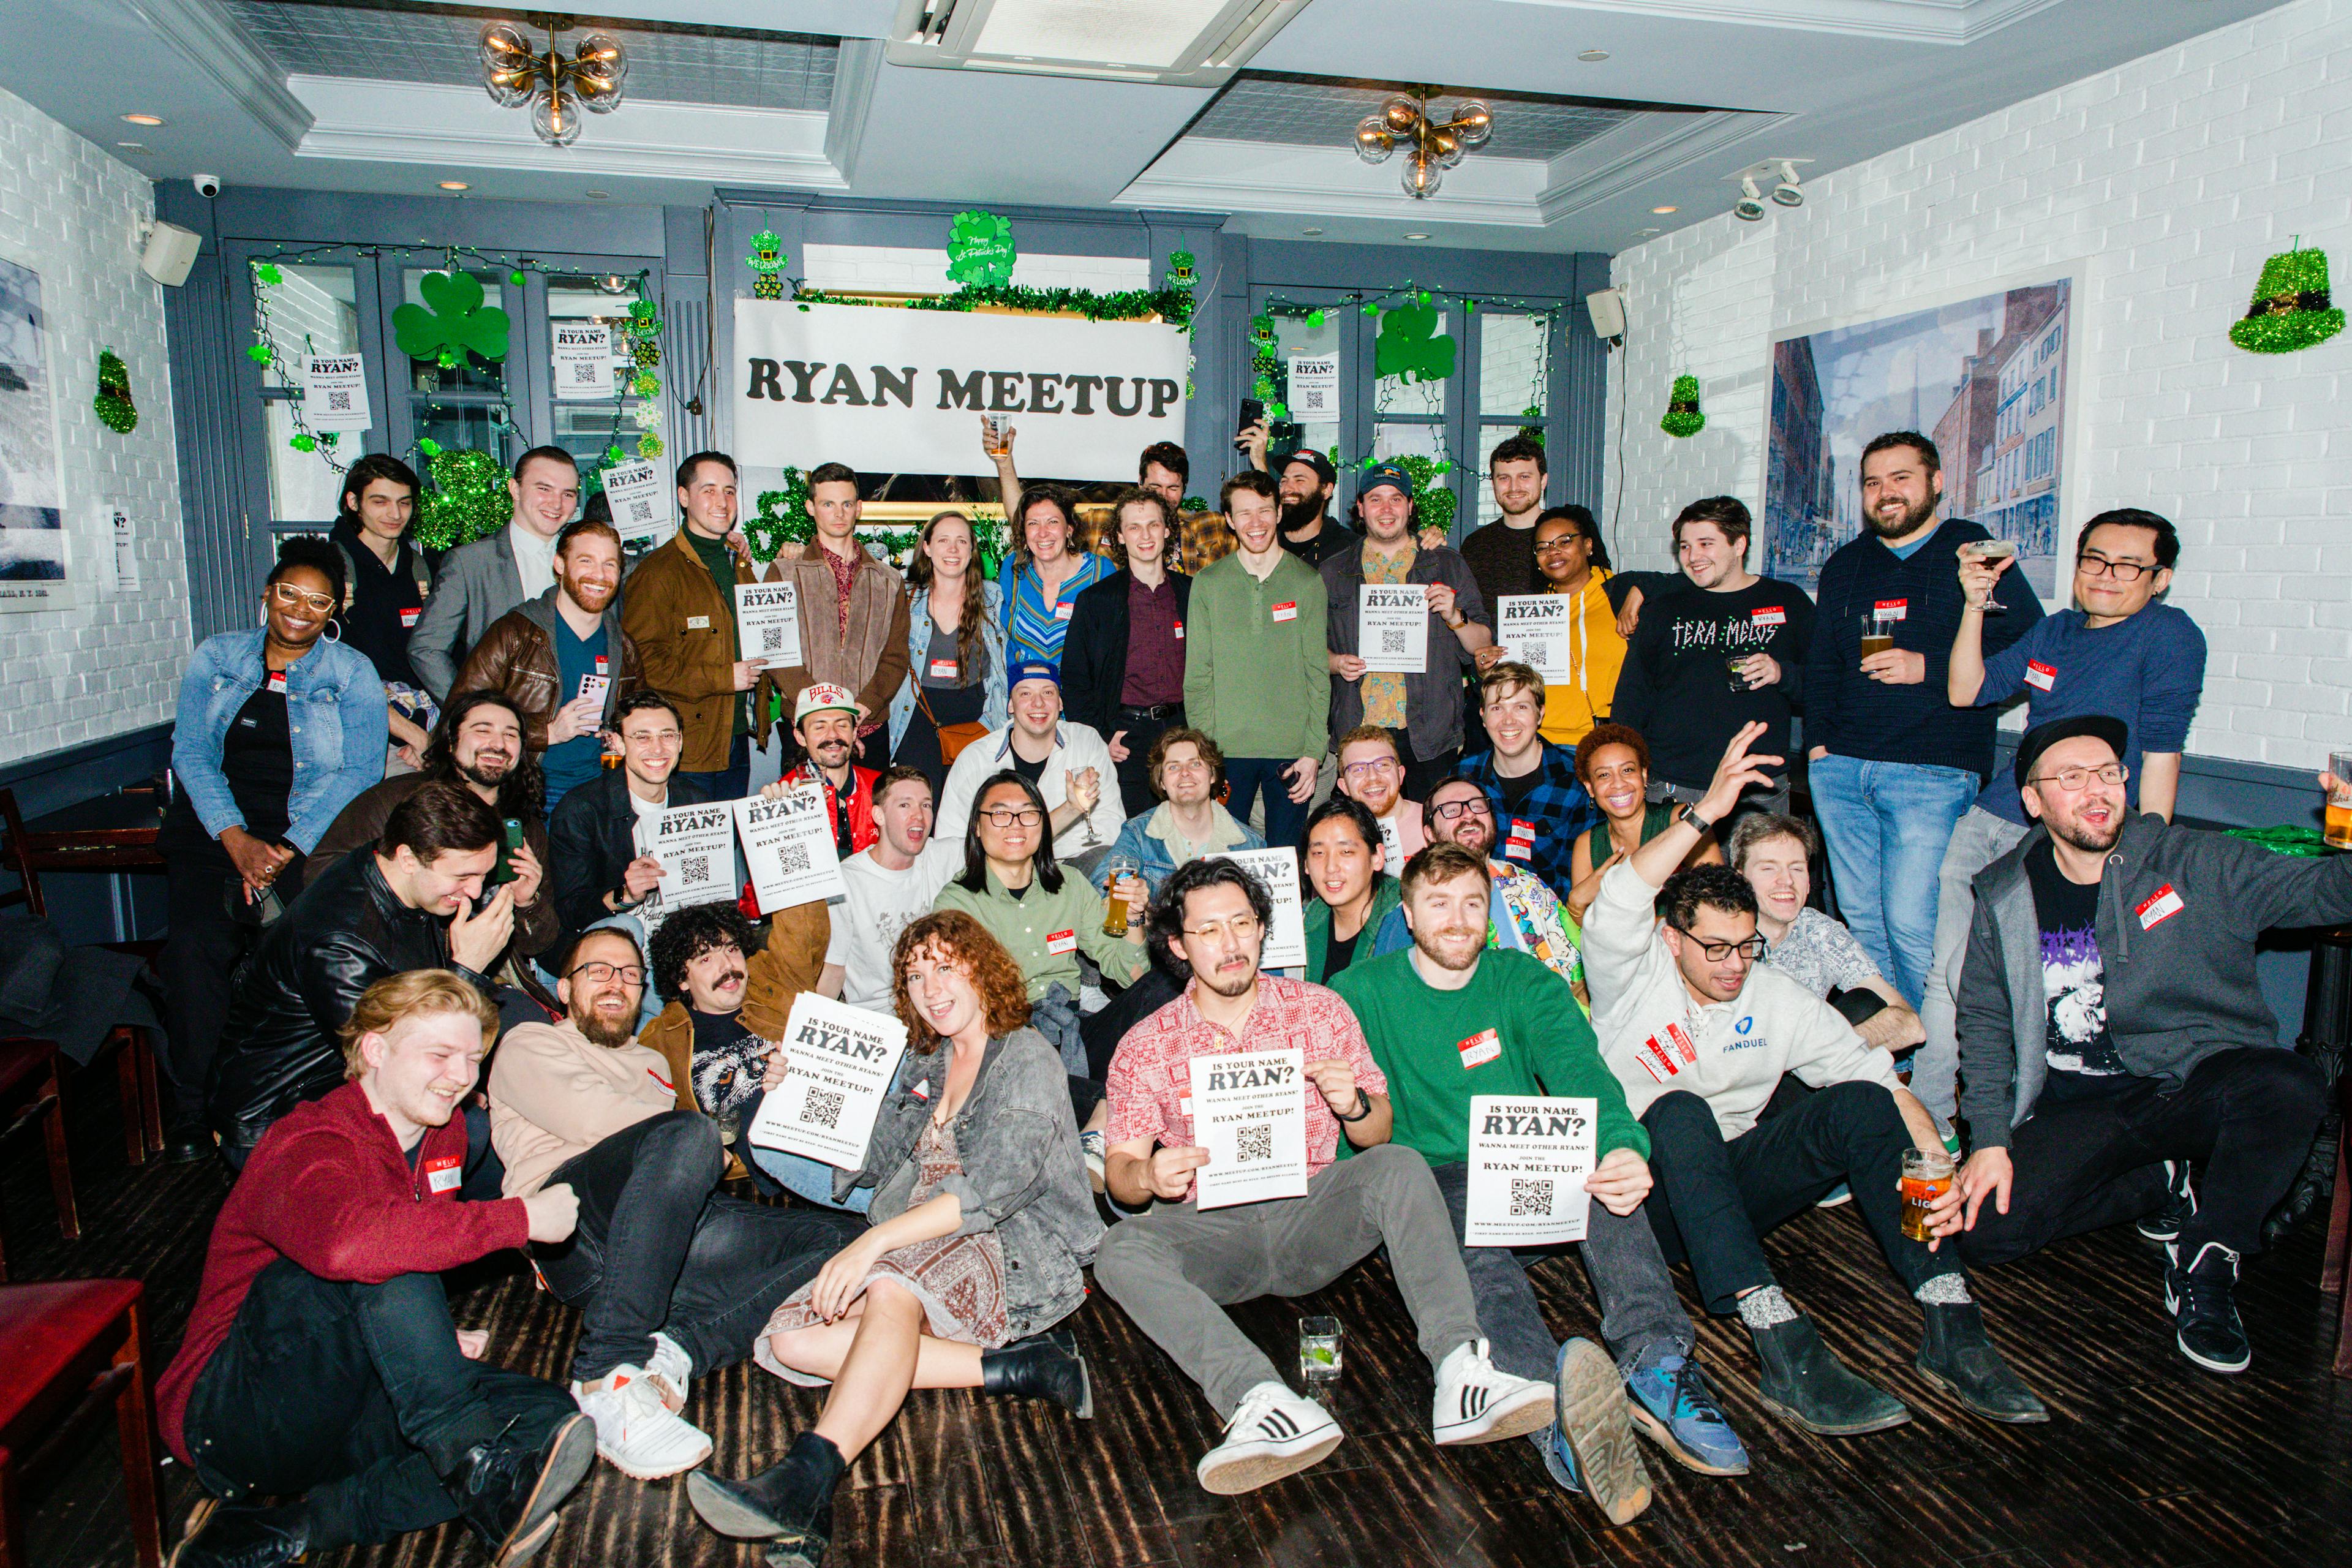 NYC Irish bar plays host to viral 'Ryan Meetup'